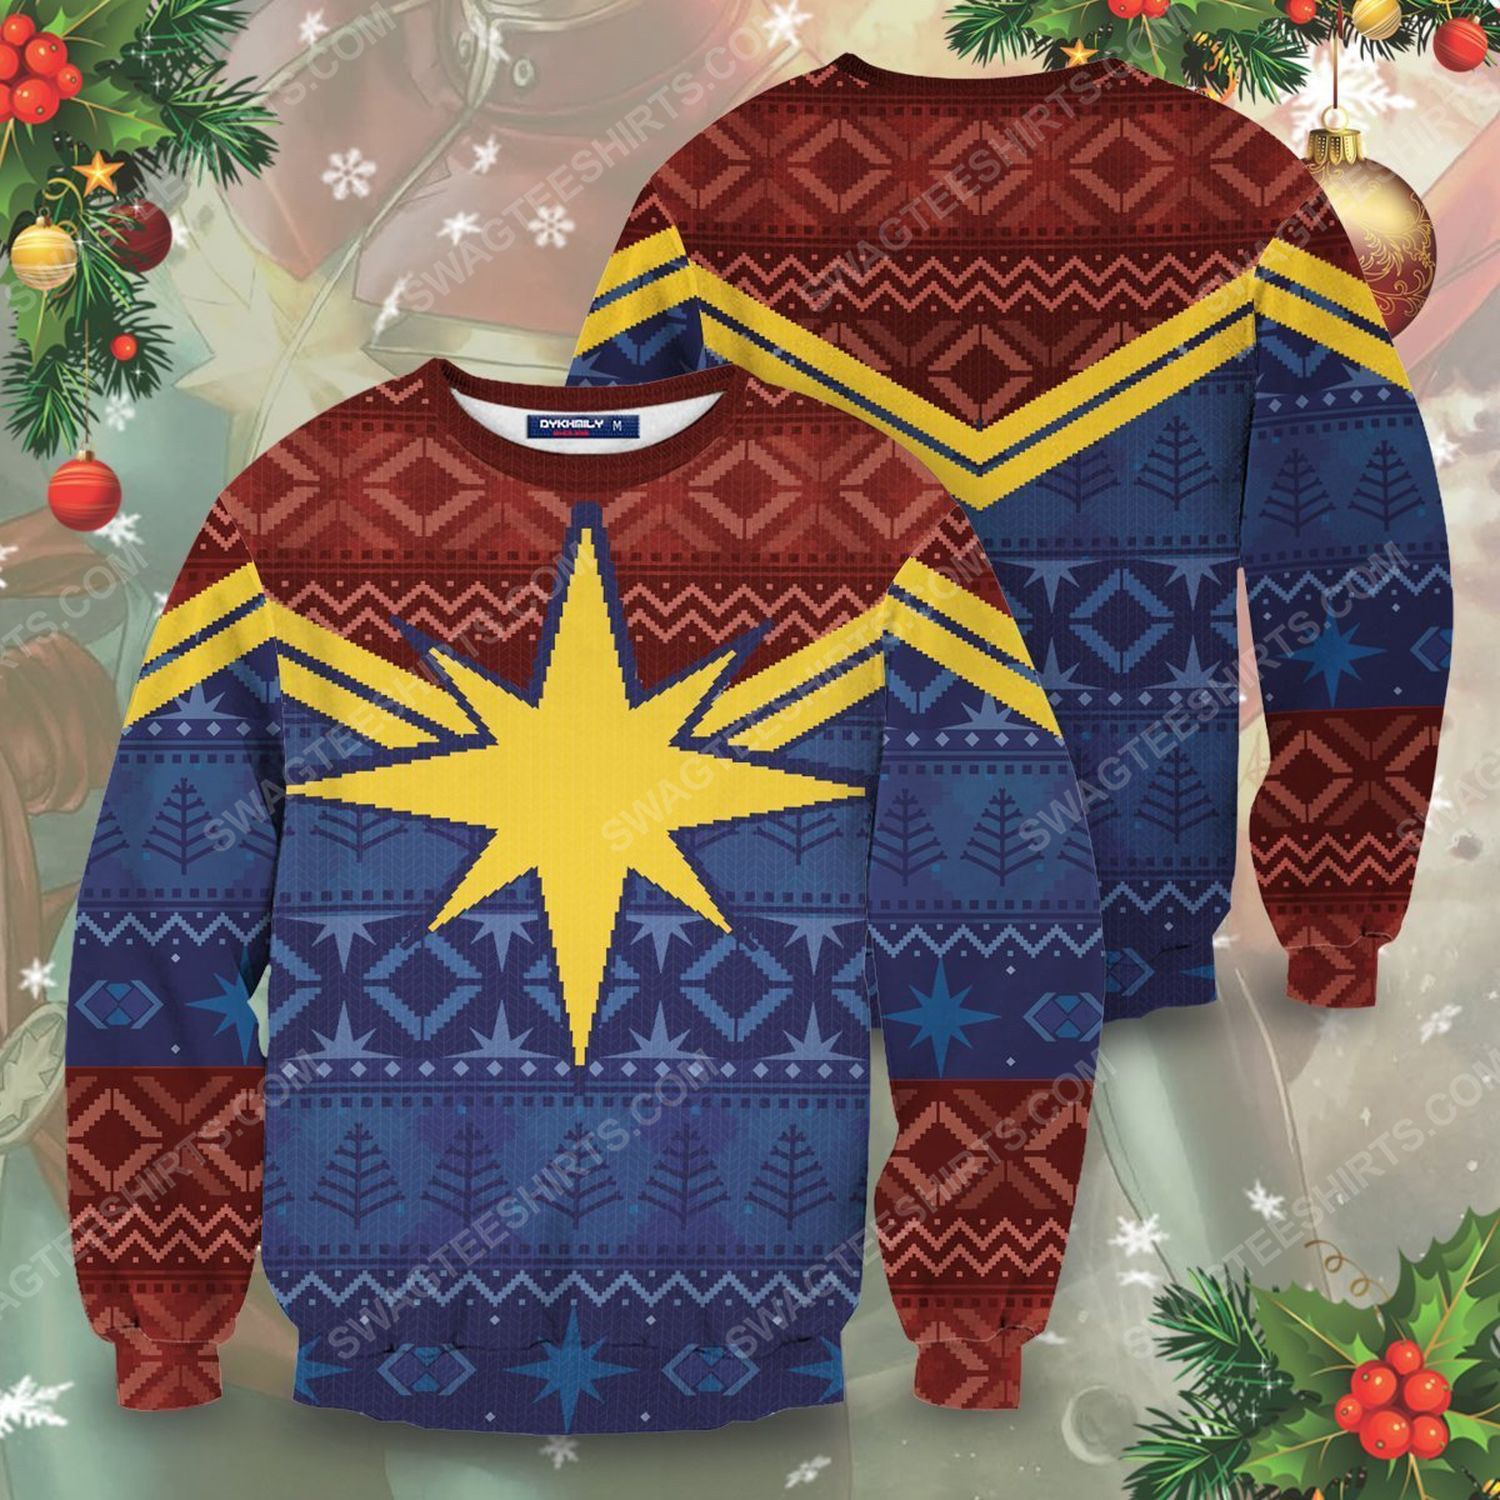 Protector of christmas skies full print ugly christmas sweater 1